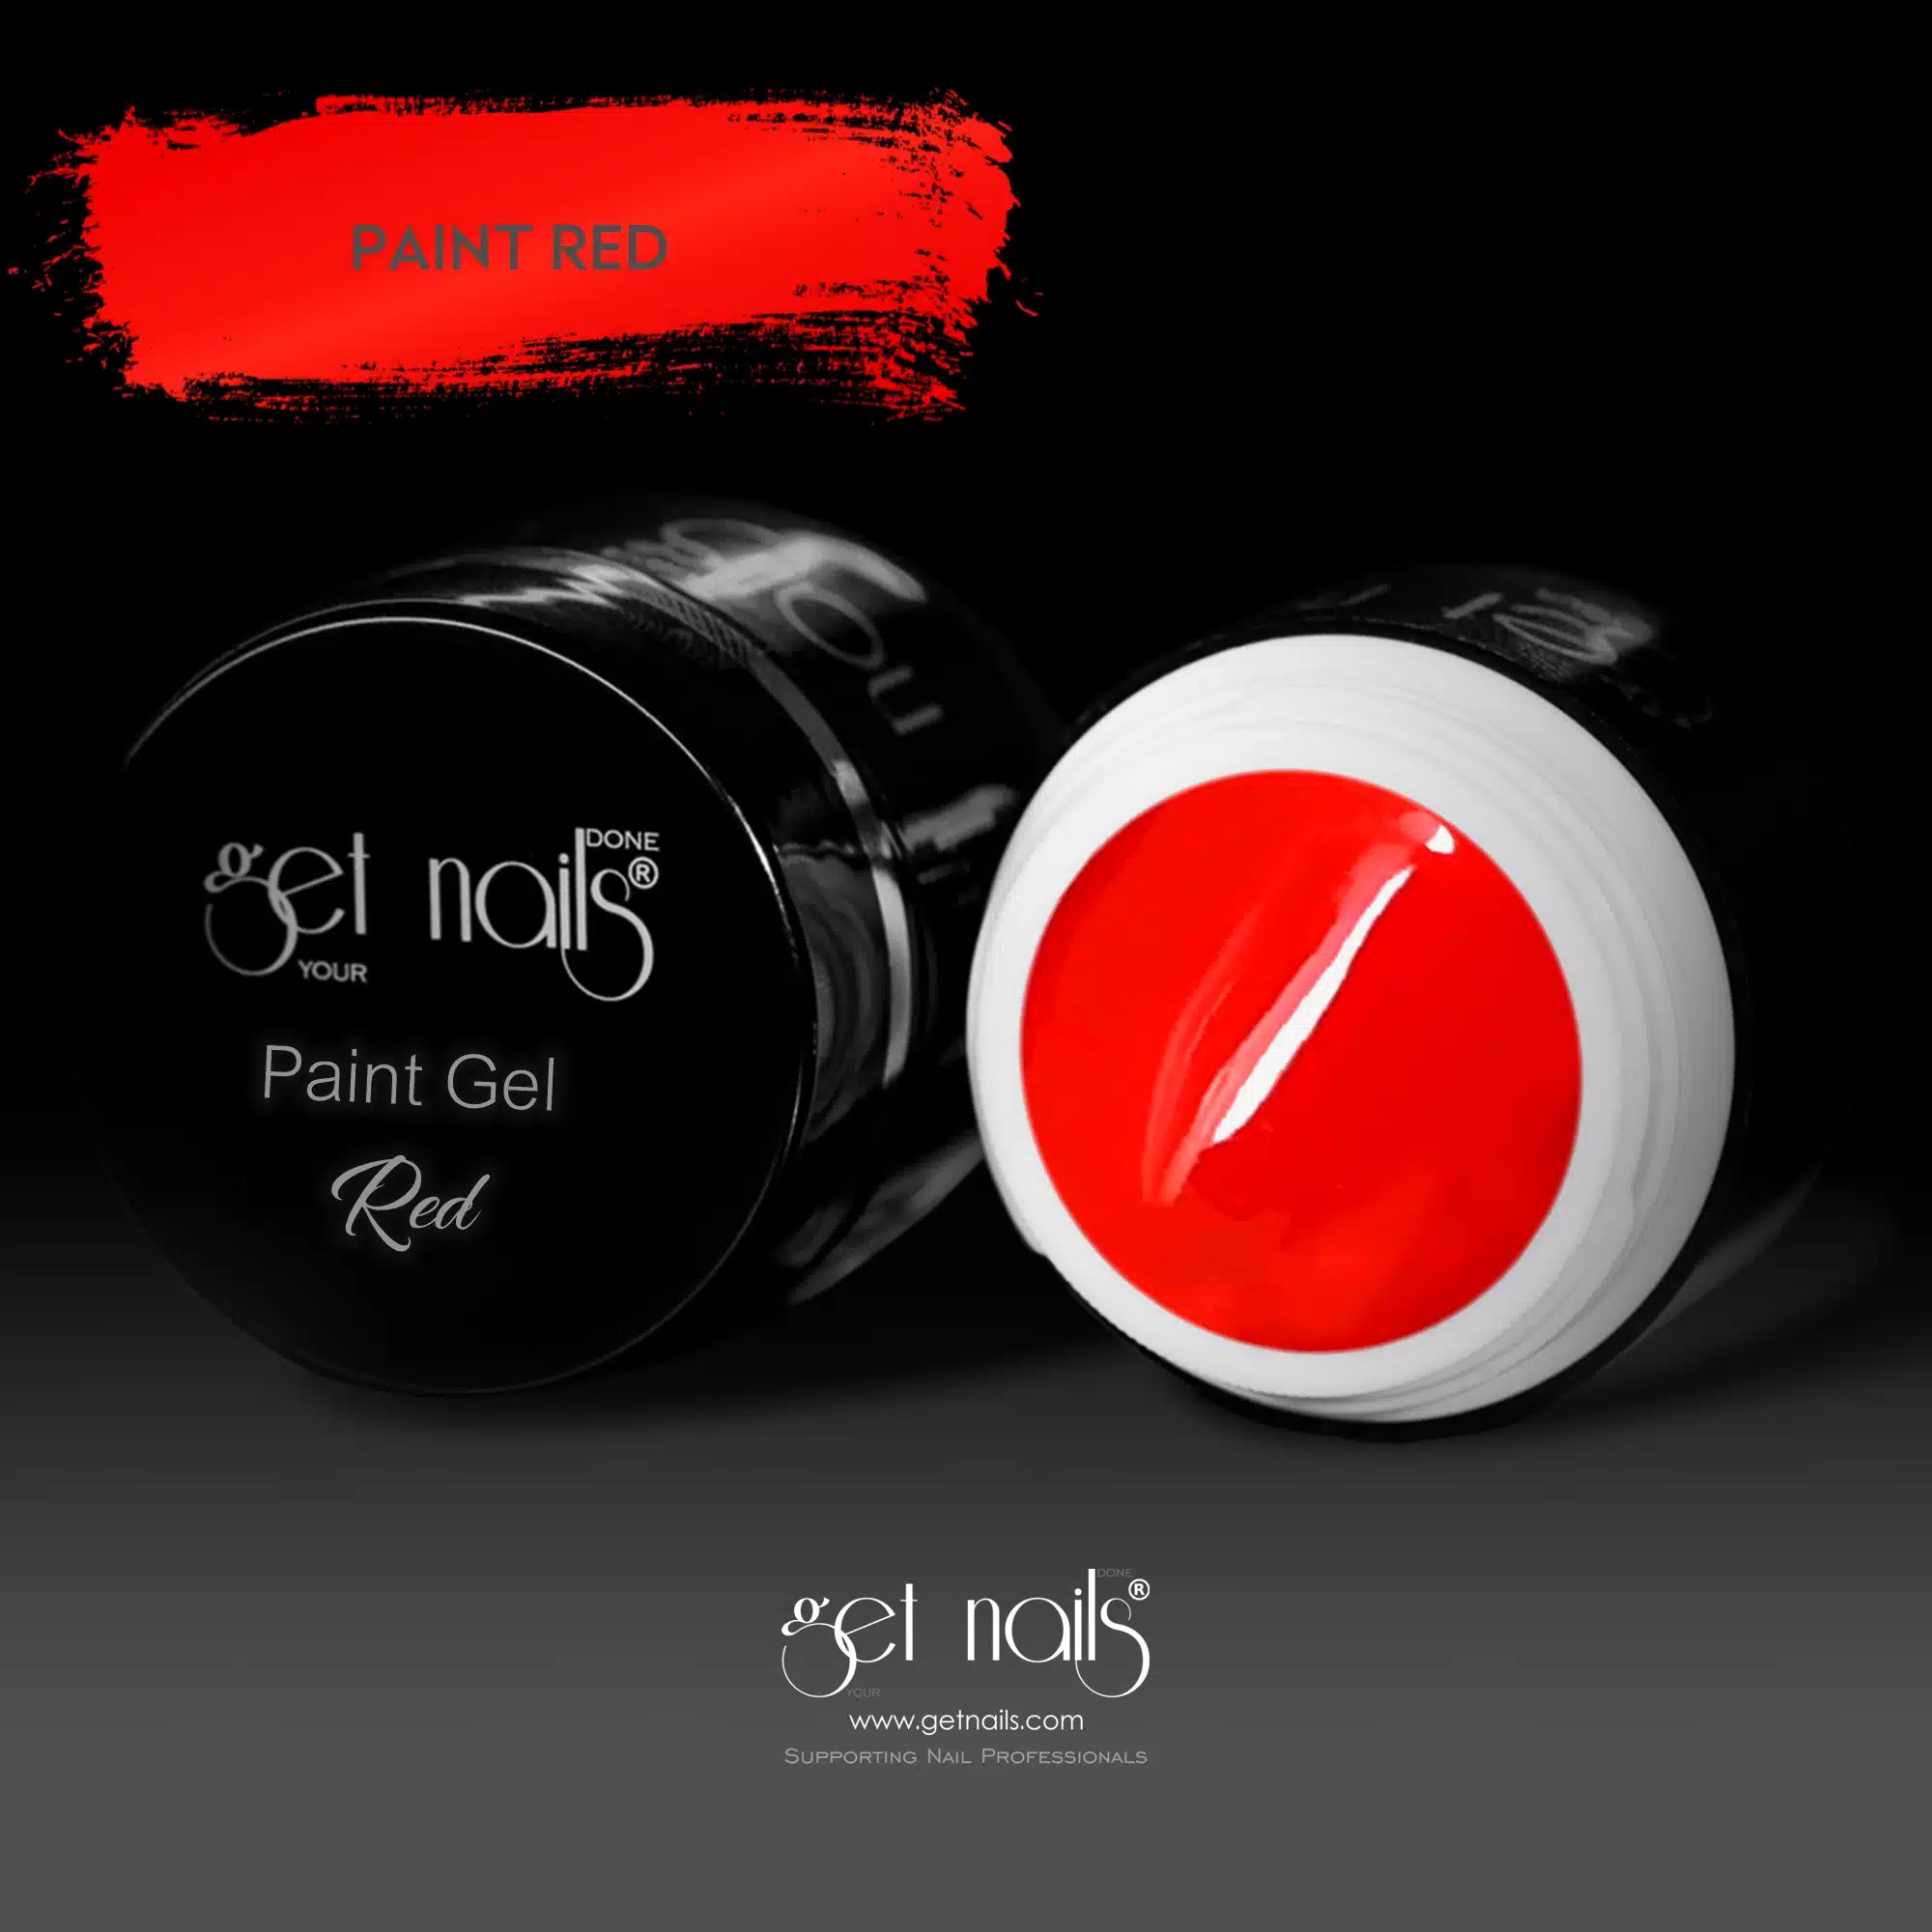 Get Nails Austria - Paint Gel Red 5g